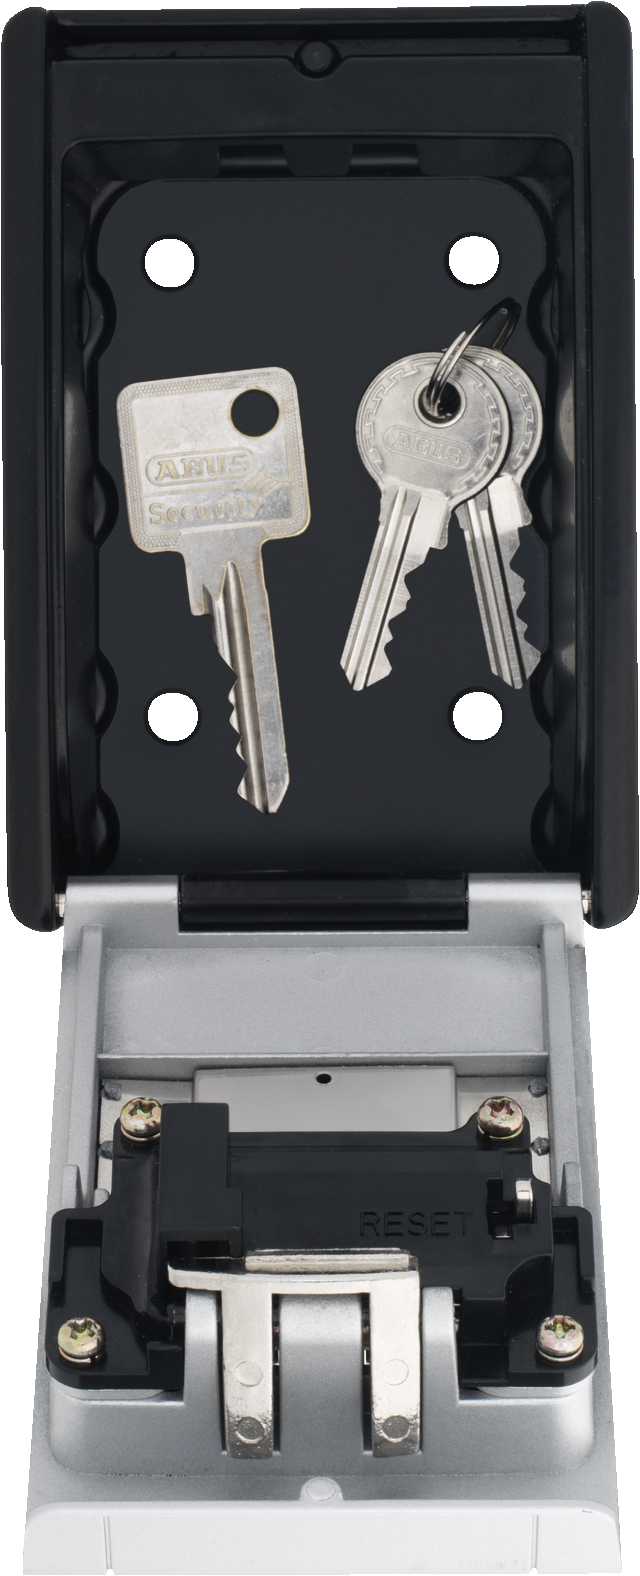 KeyGarage™ 787 with keys